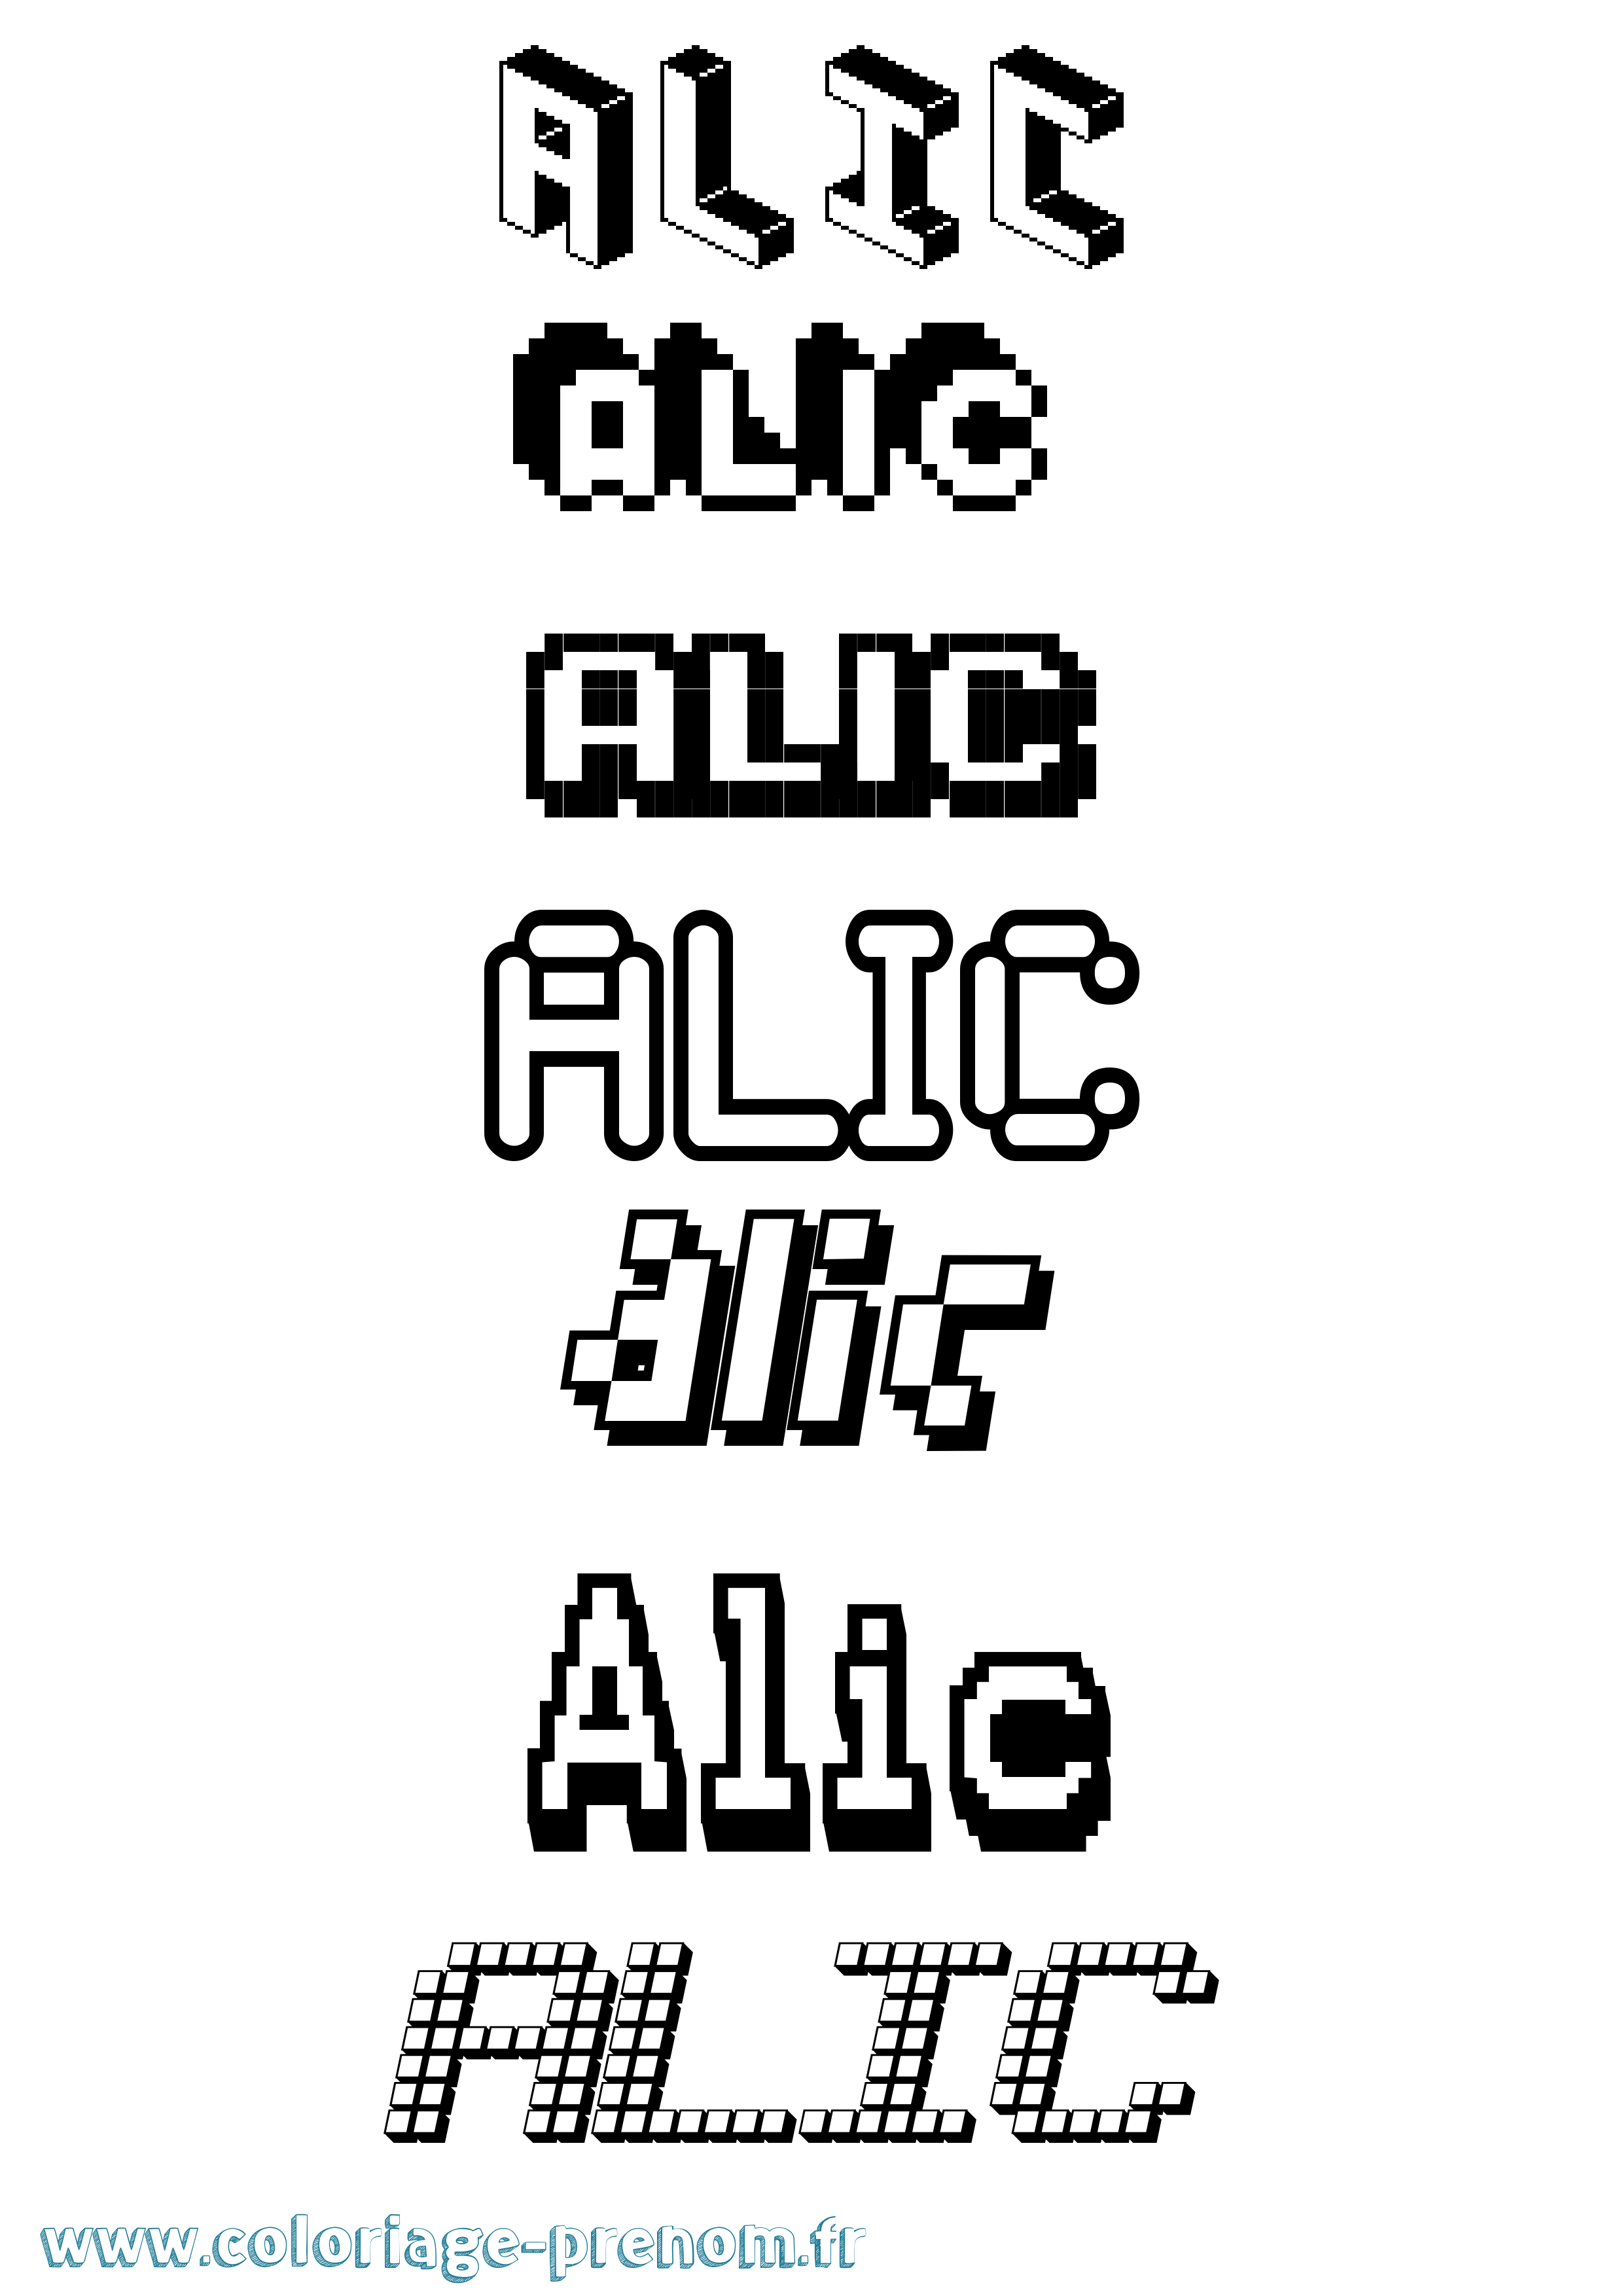 Coloriage prénom Alic Pixel